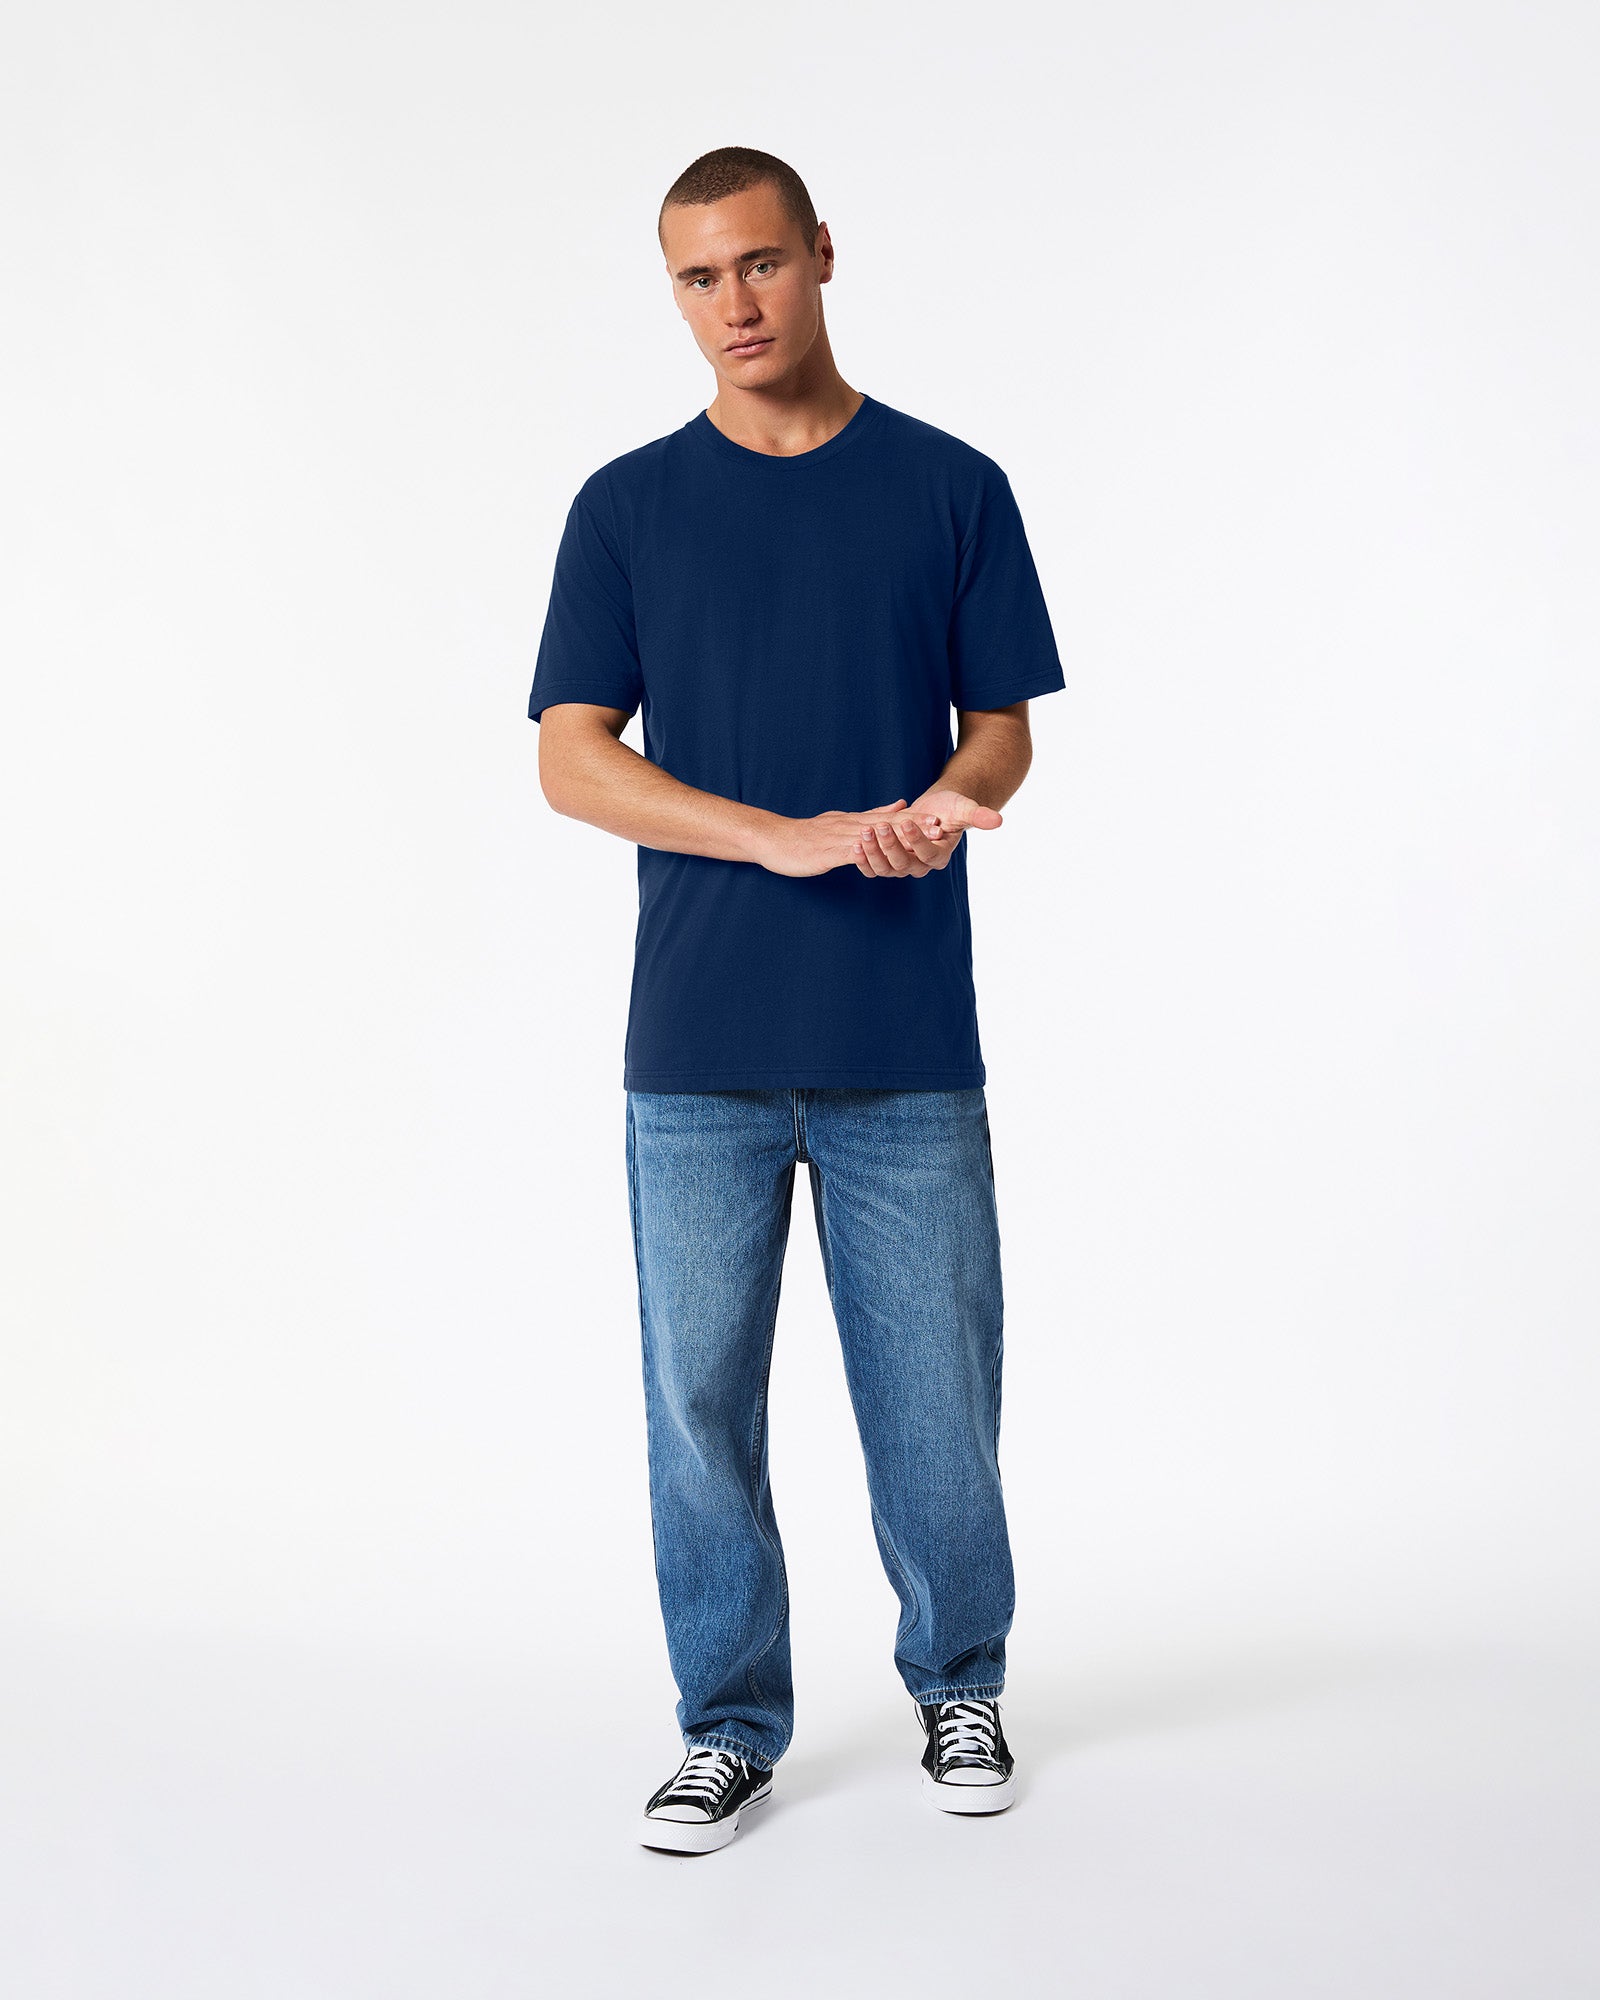 Fine Jersey Unisex Short Sleeve T-Shirt - Navy